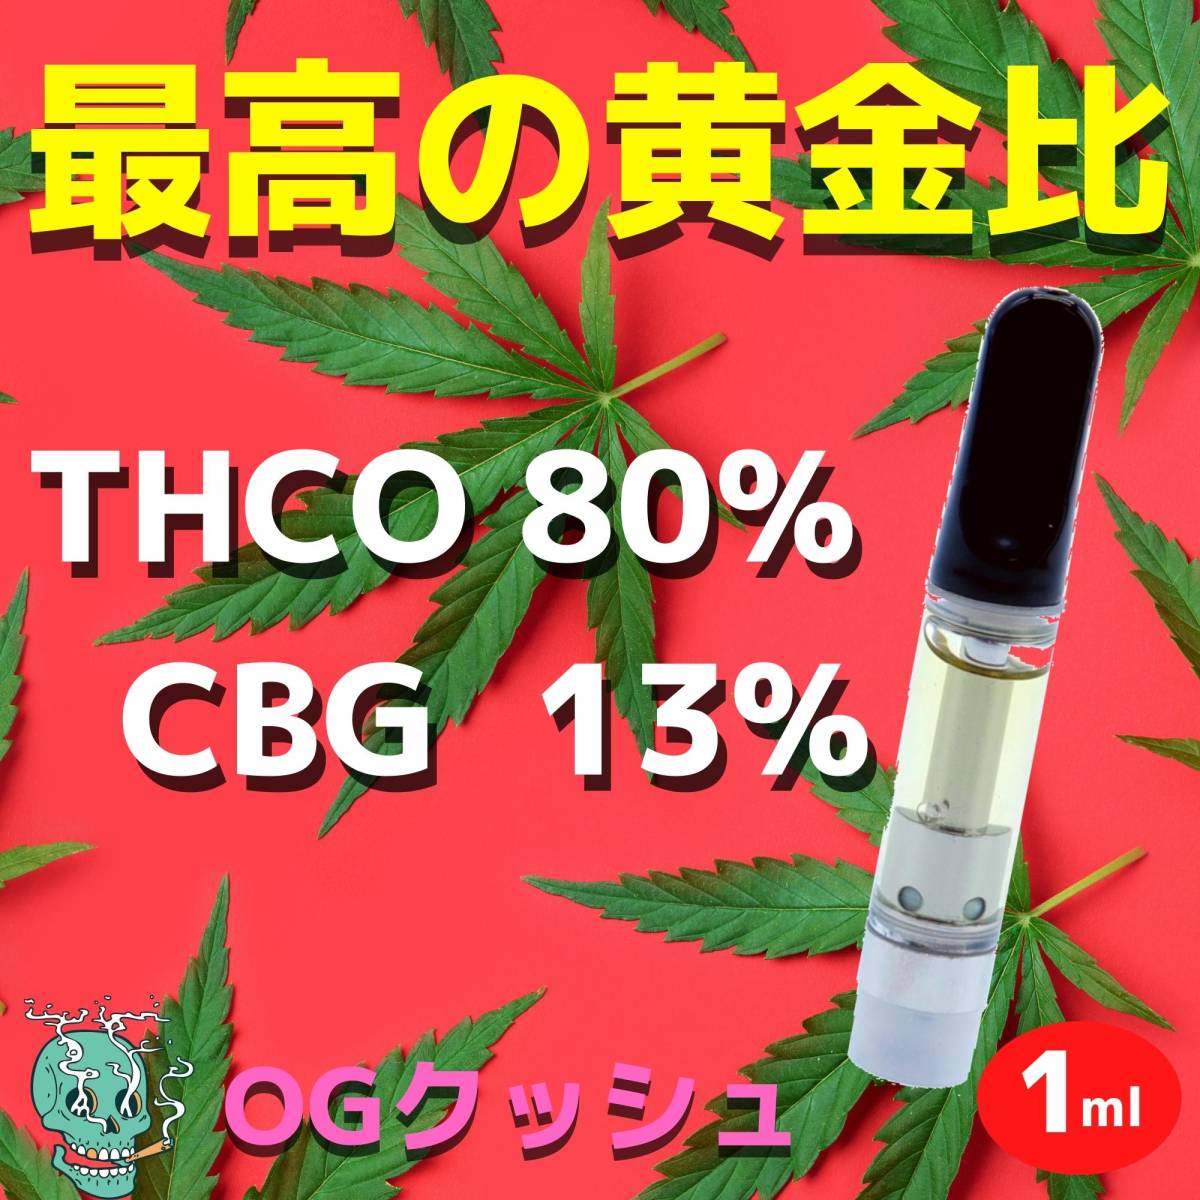 THCO リキッド 93% 1.0ml OGKUSH味 THC-O bpbd.kendalkab.go.id